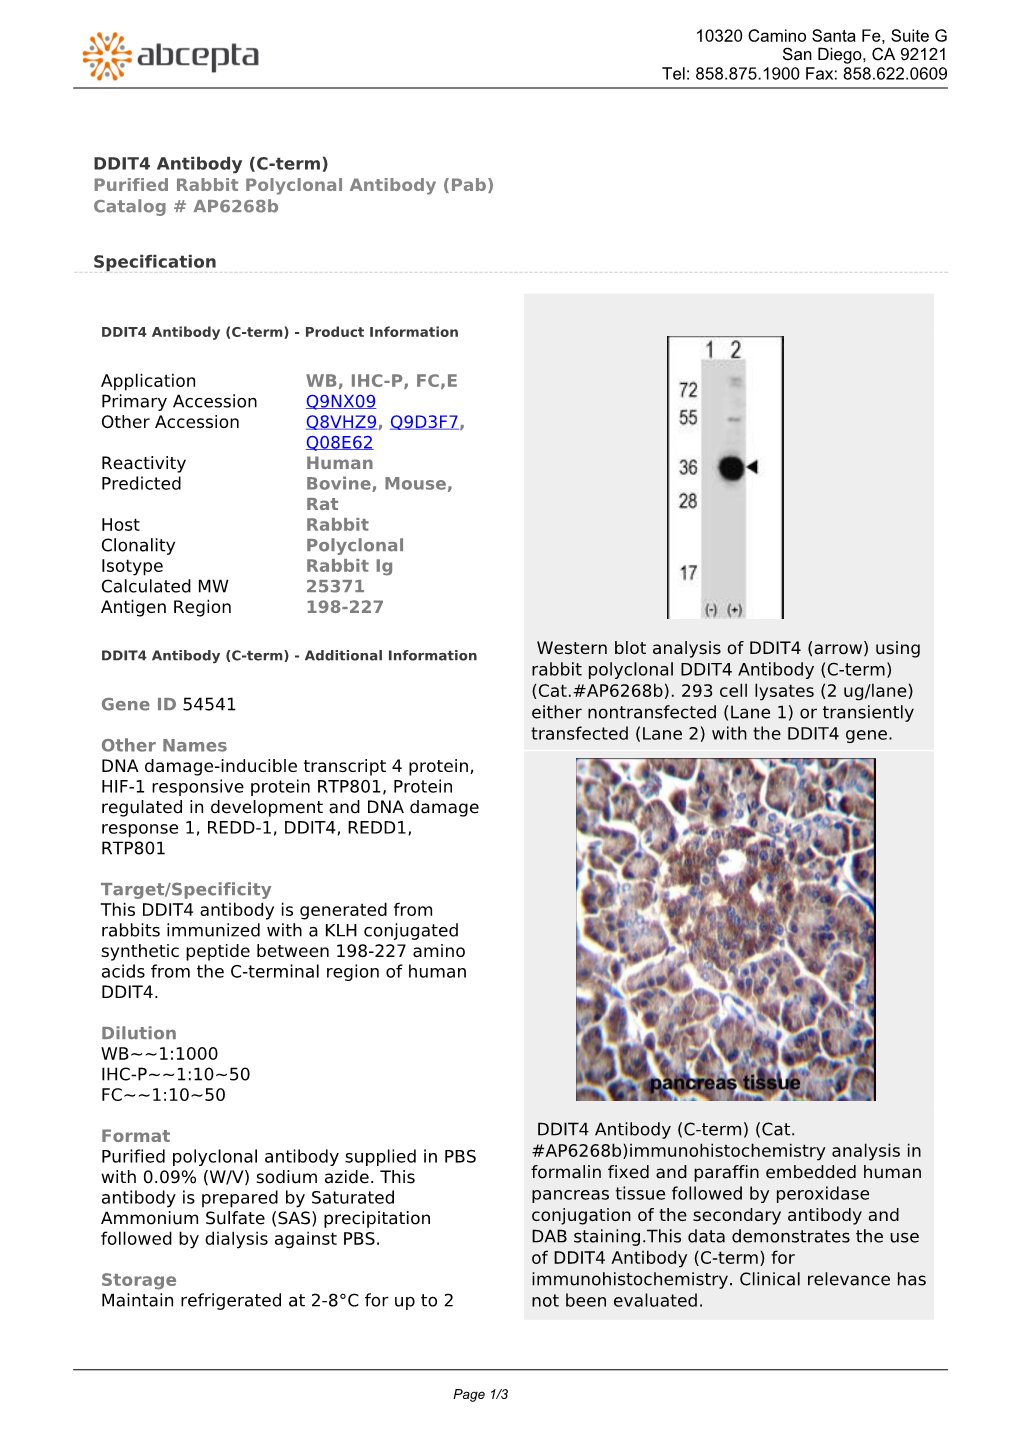 DDIT4 Antibody (C-Term) Purified Rabbit Polyclonal Antibody (Pab) Catalog # Ap6268b